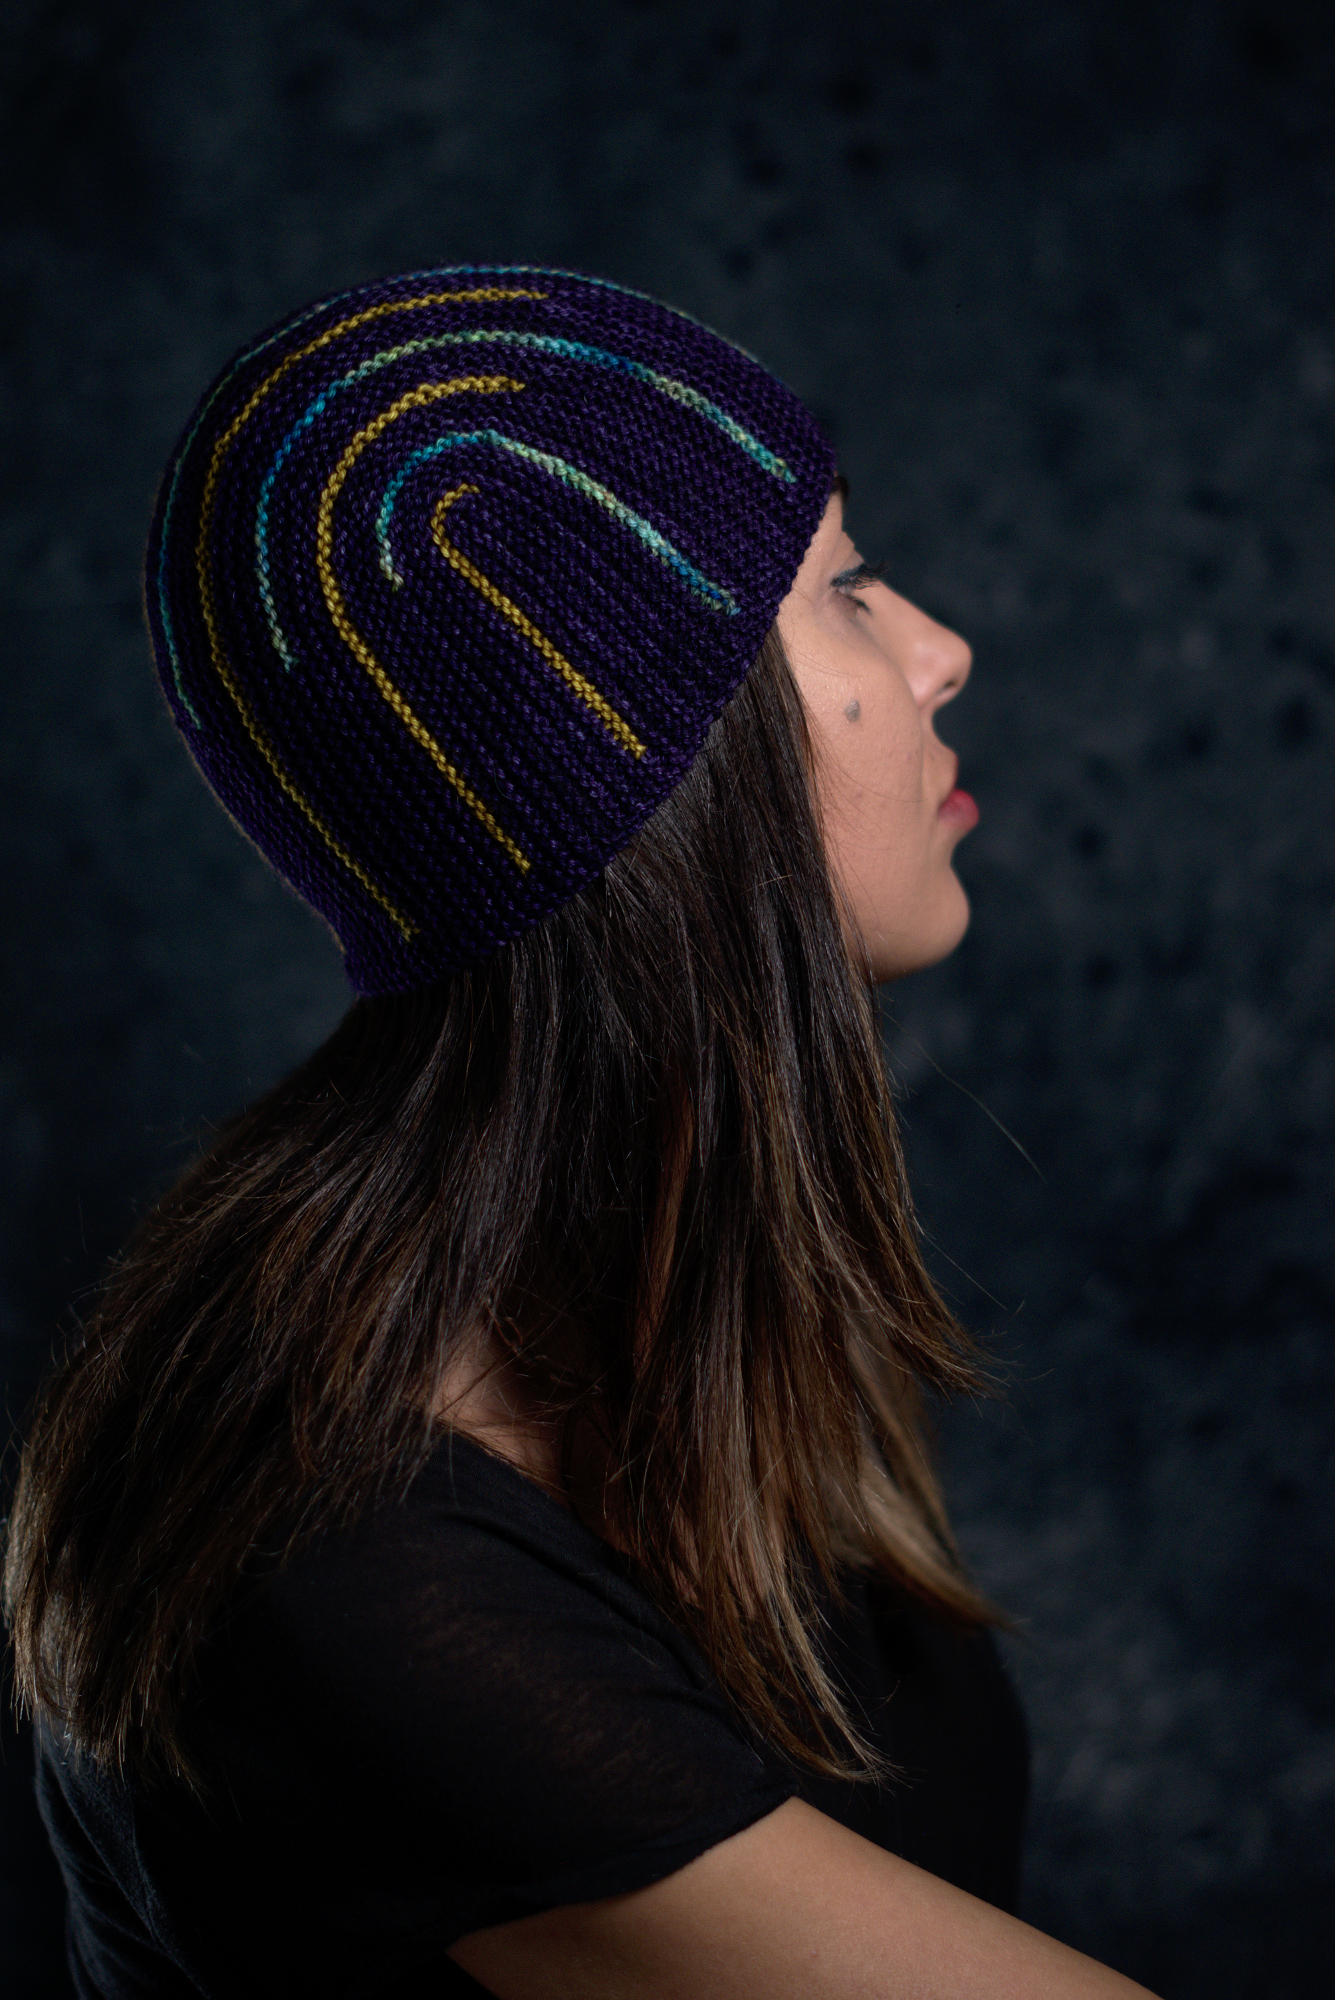 Duality sideways knit short row colourwork hat knitting pattern